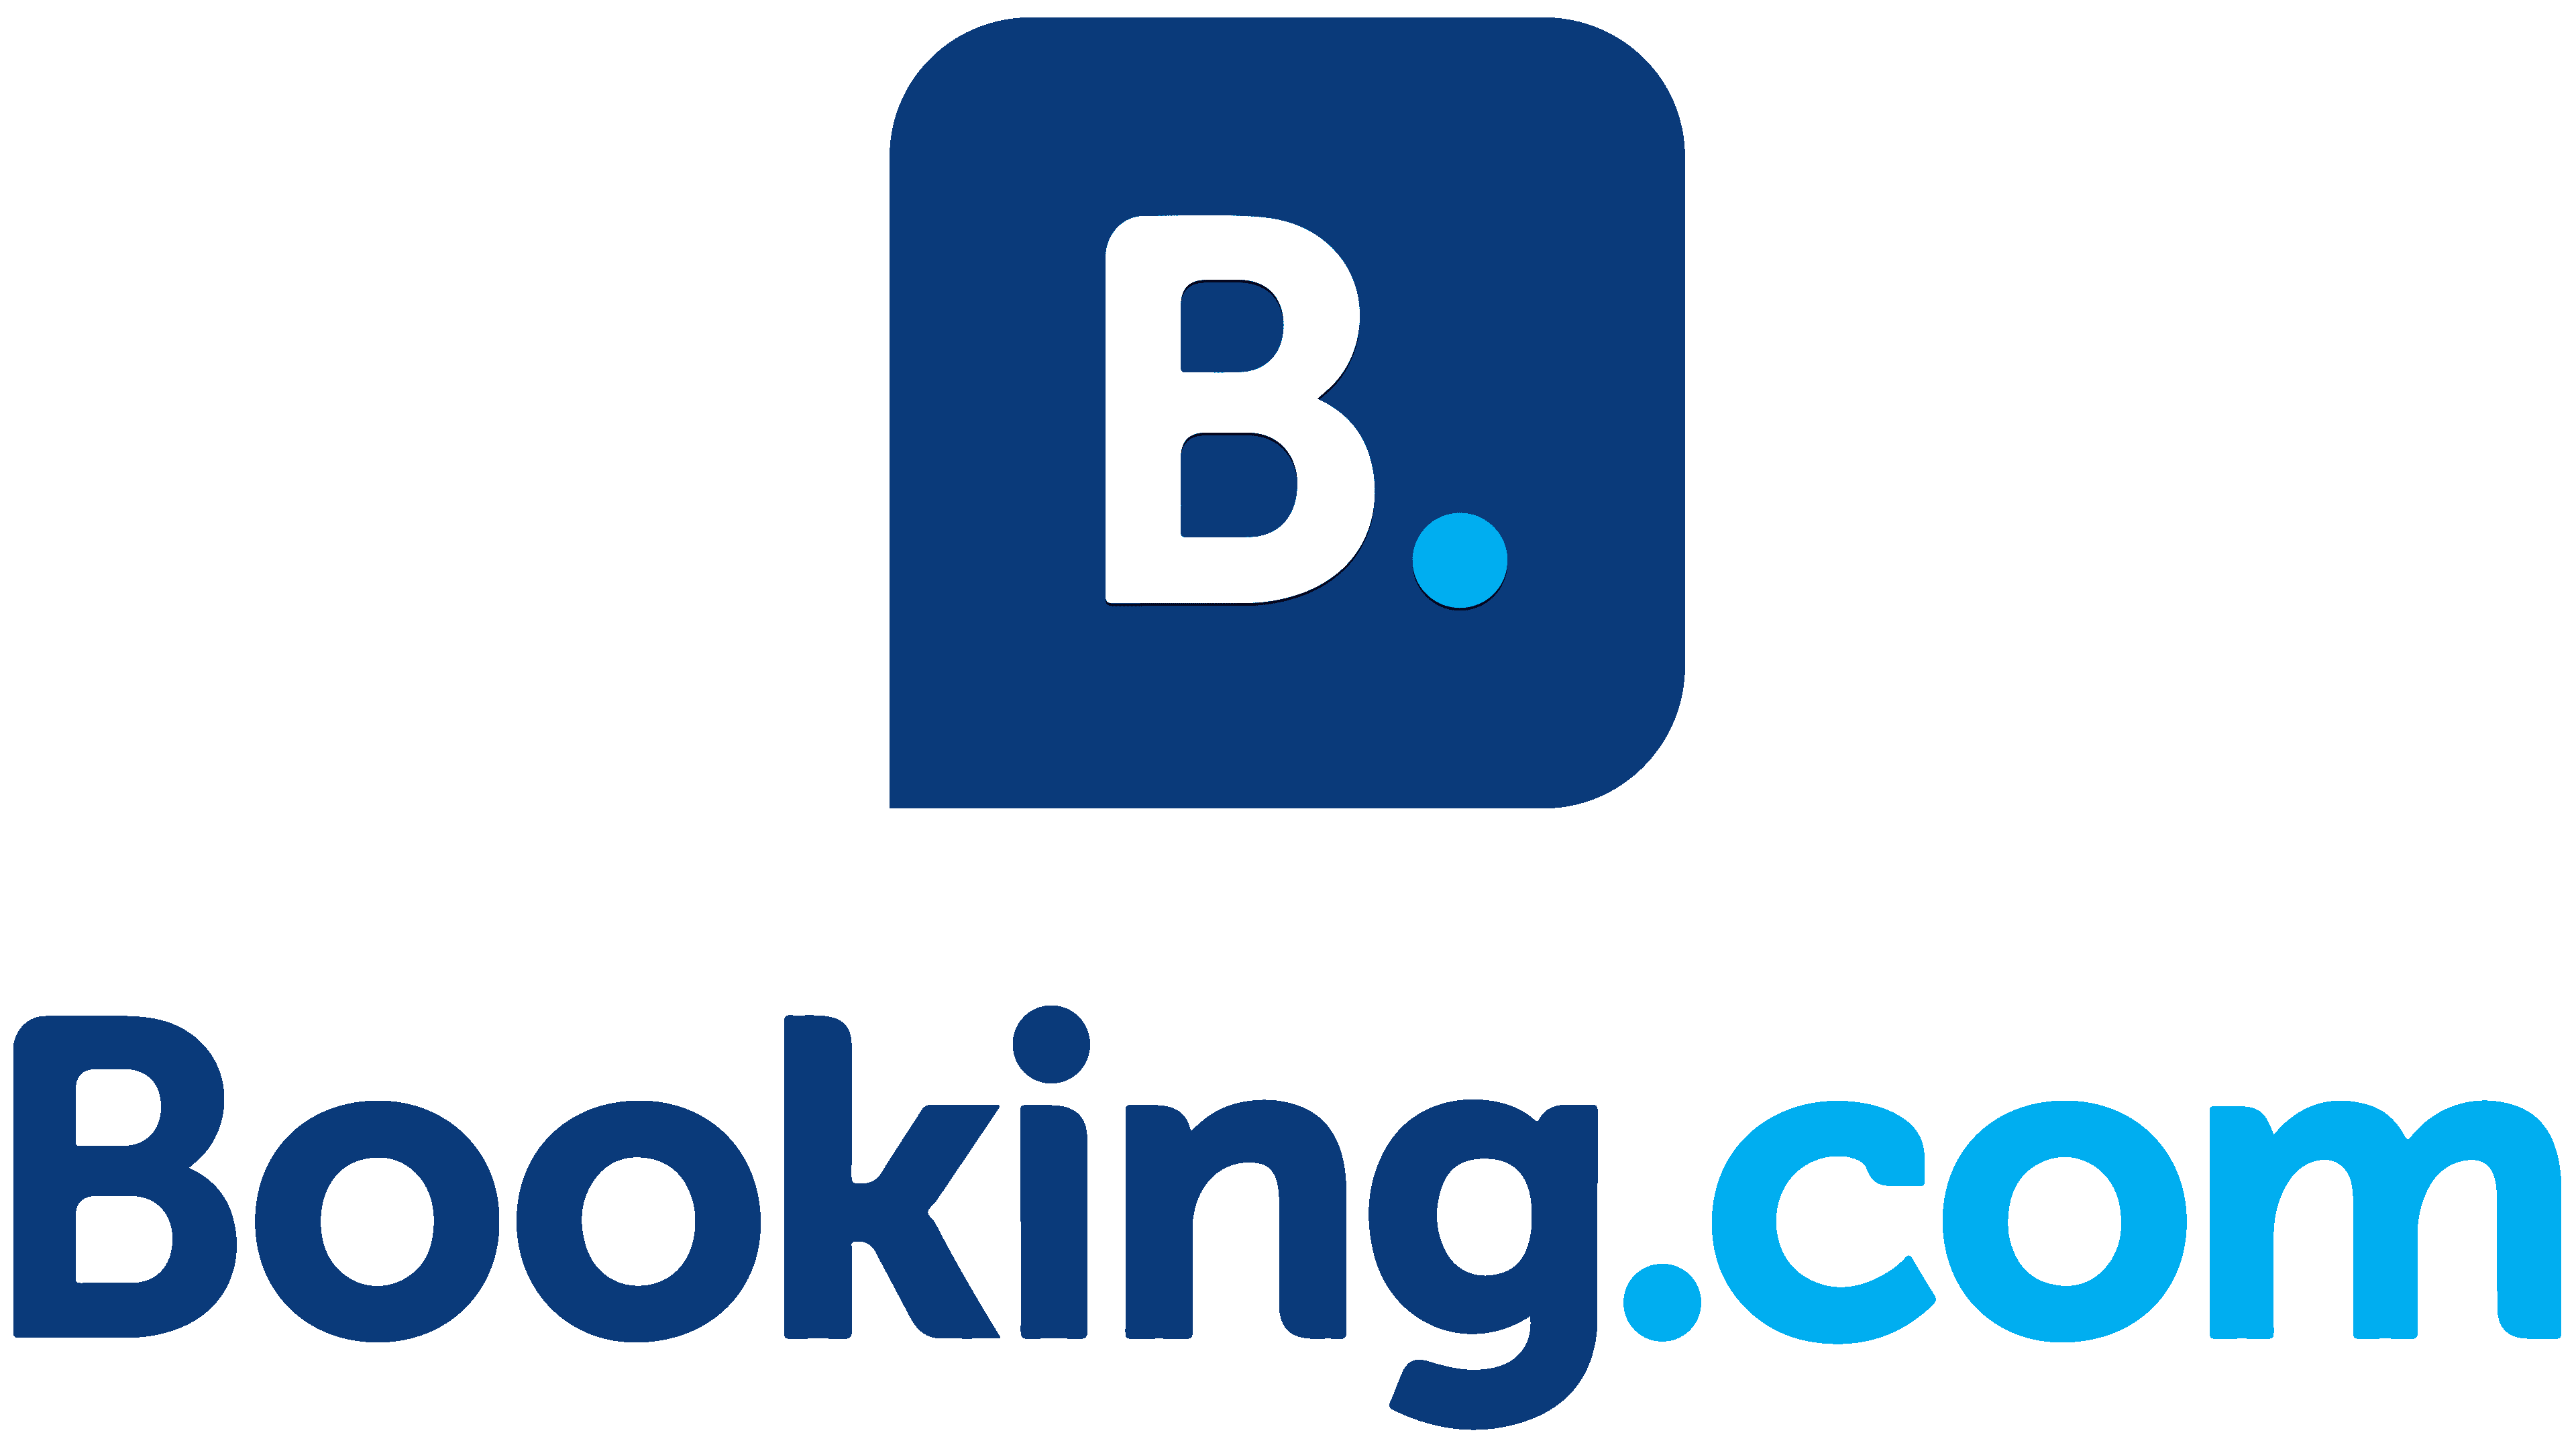 Https booking pro. Booking логотип. Значок букинг. Booking.com логотип. Bauking.